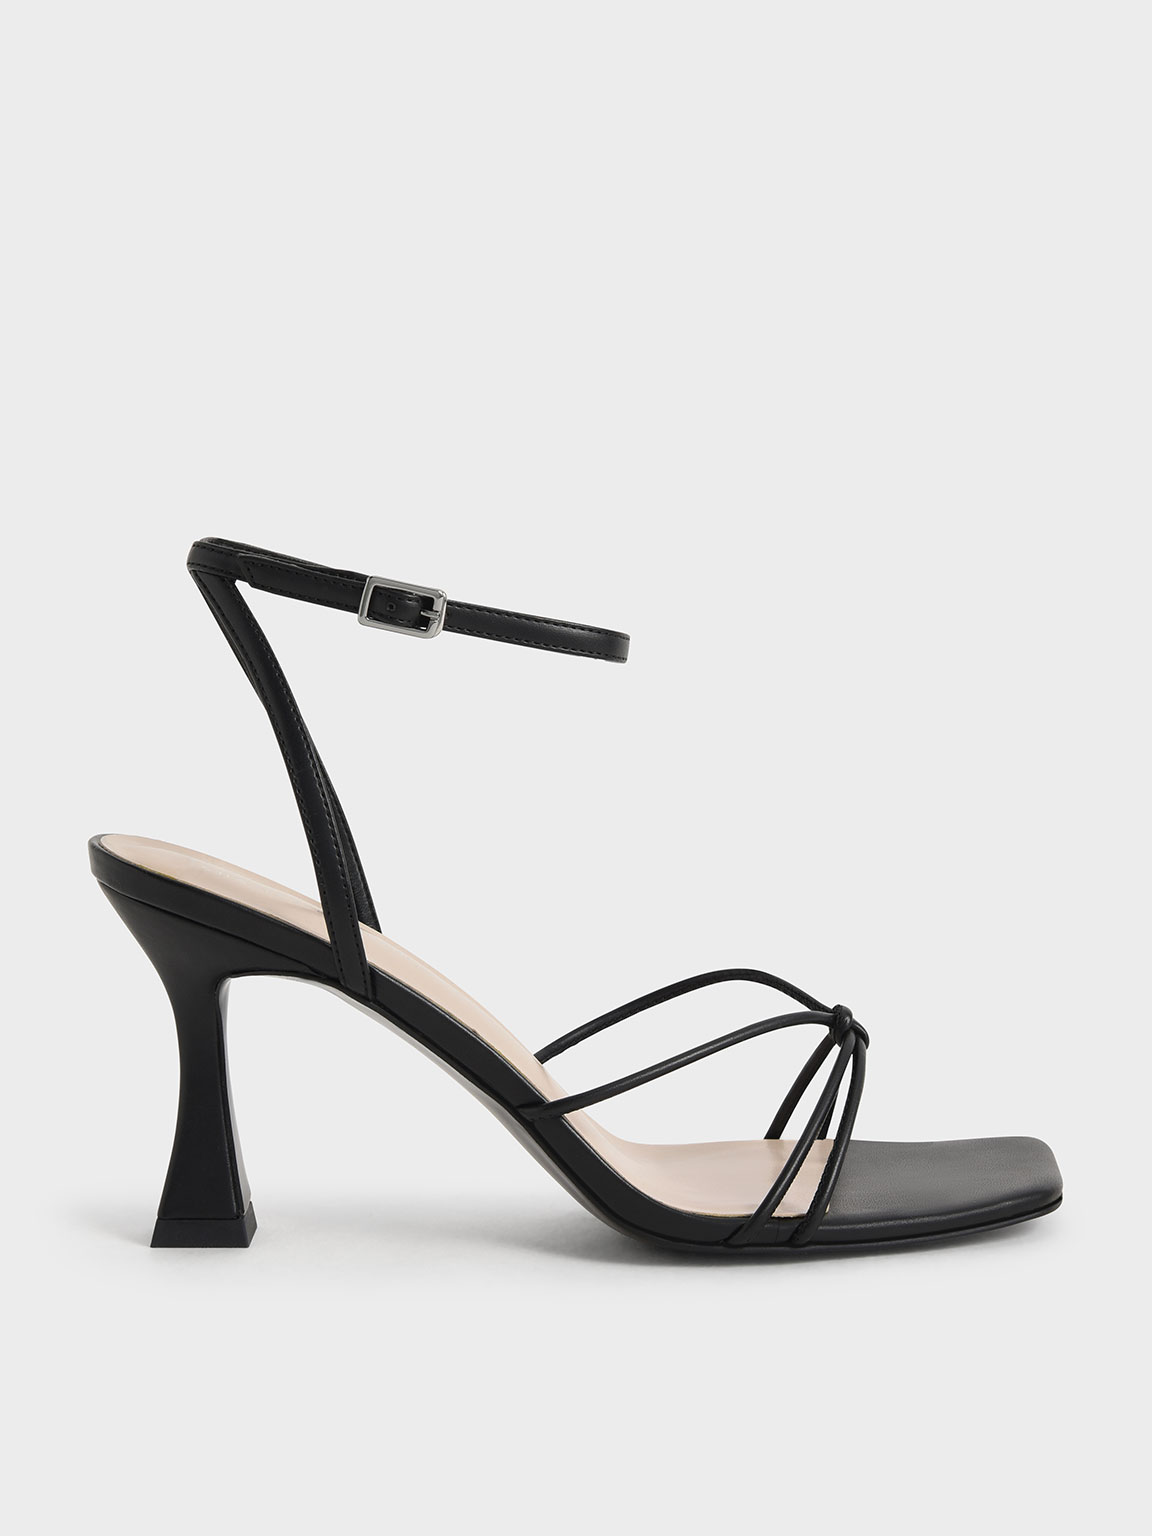 MISS KEITH Luxury Brand Design Women High Heel Fashion Ankle